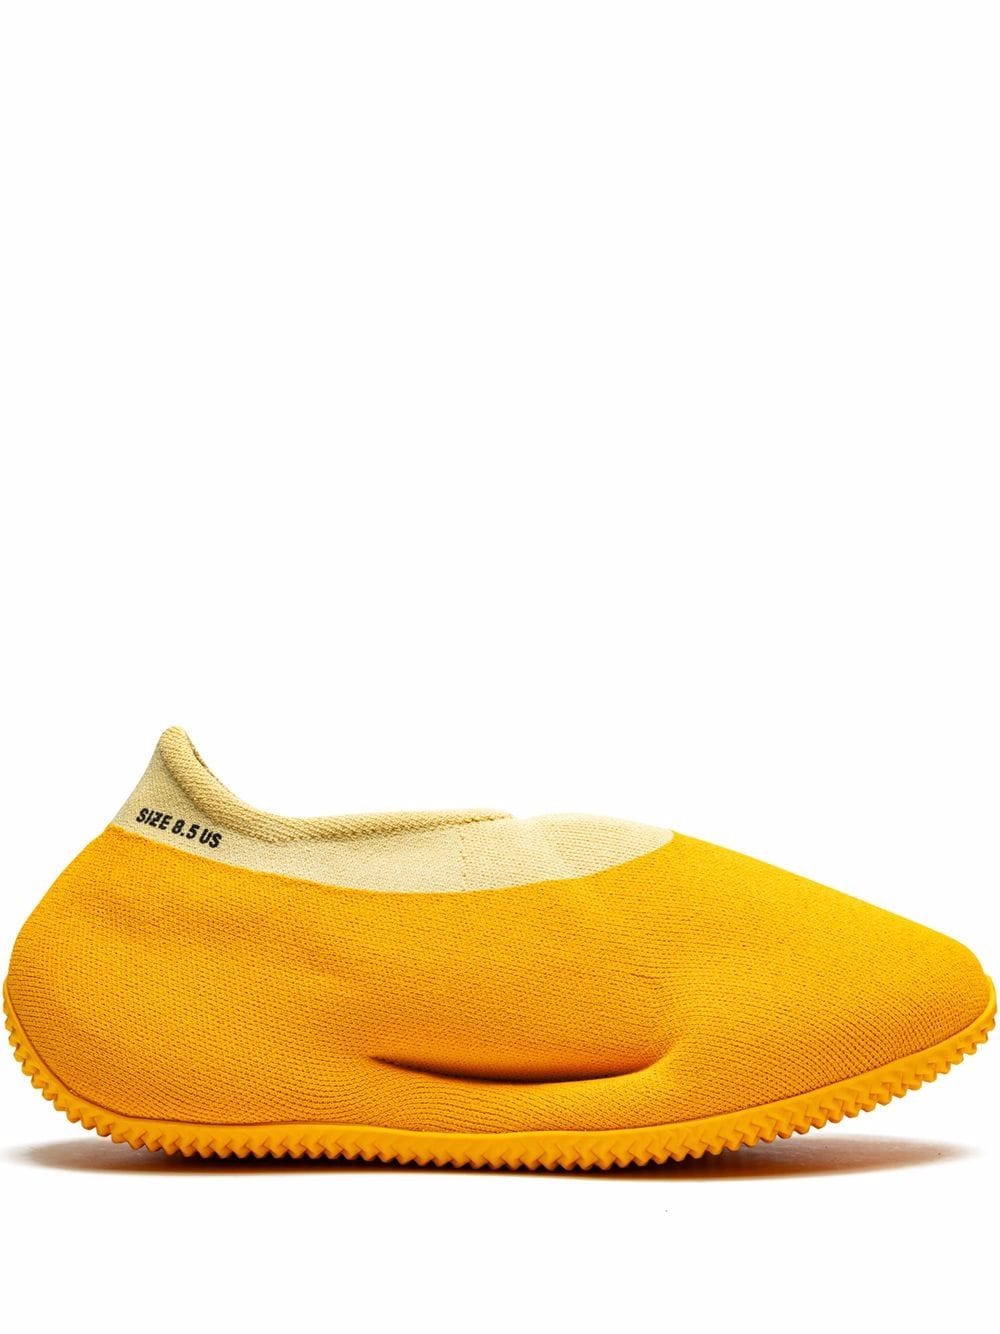 adidas Yeezy YEEZY Knit Runner "Sulfur" sneakers - Yellow von adidas Yeezy